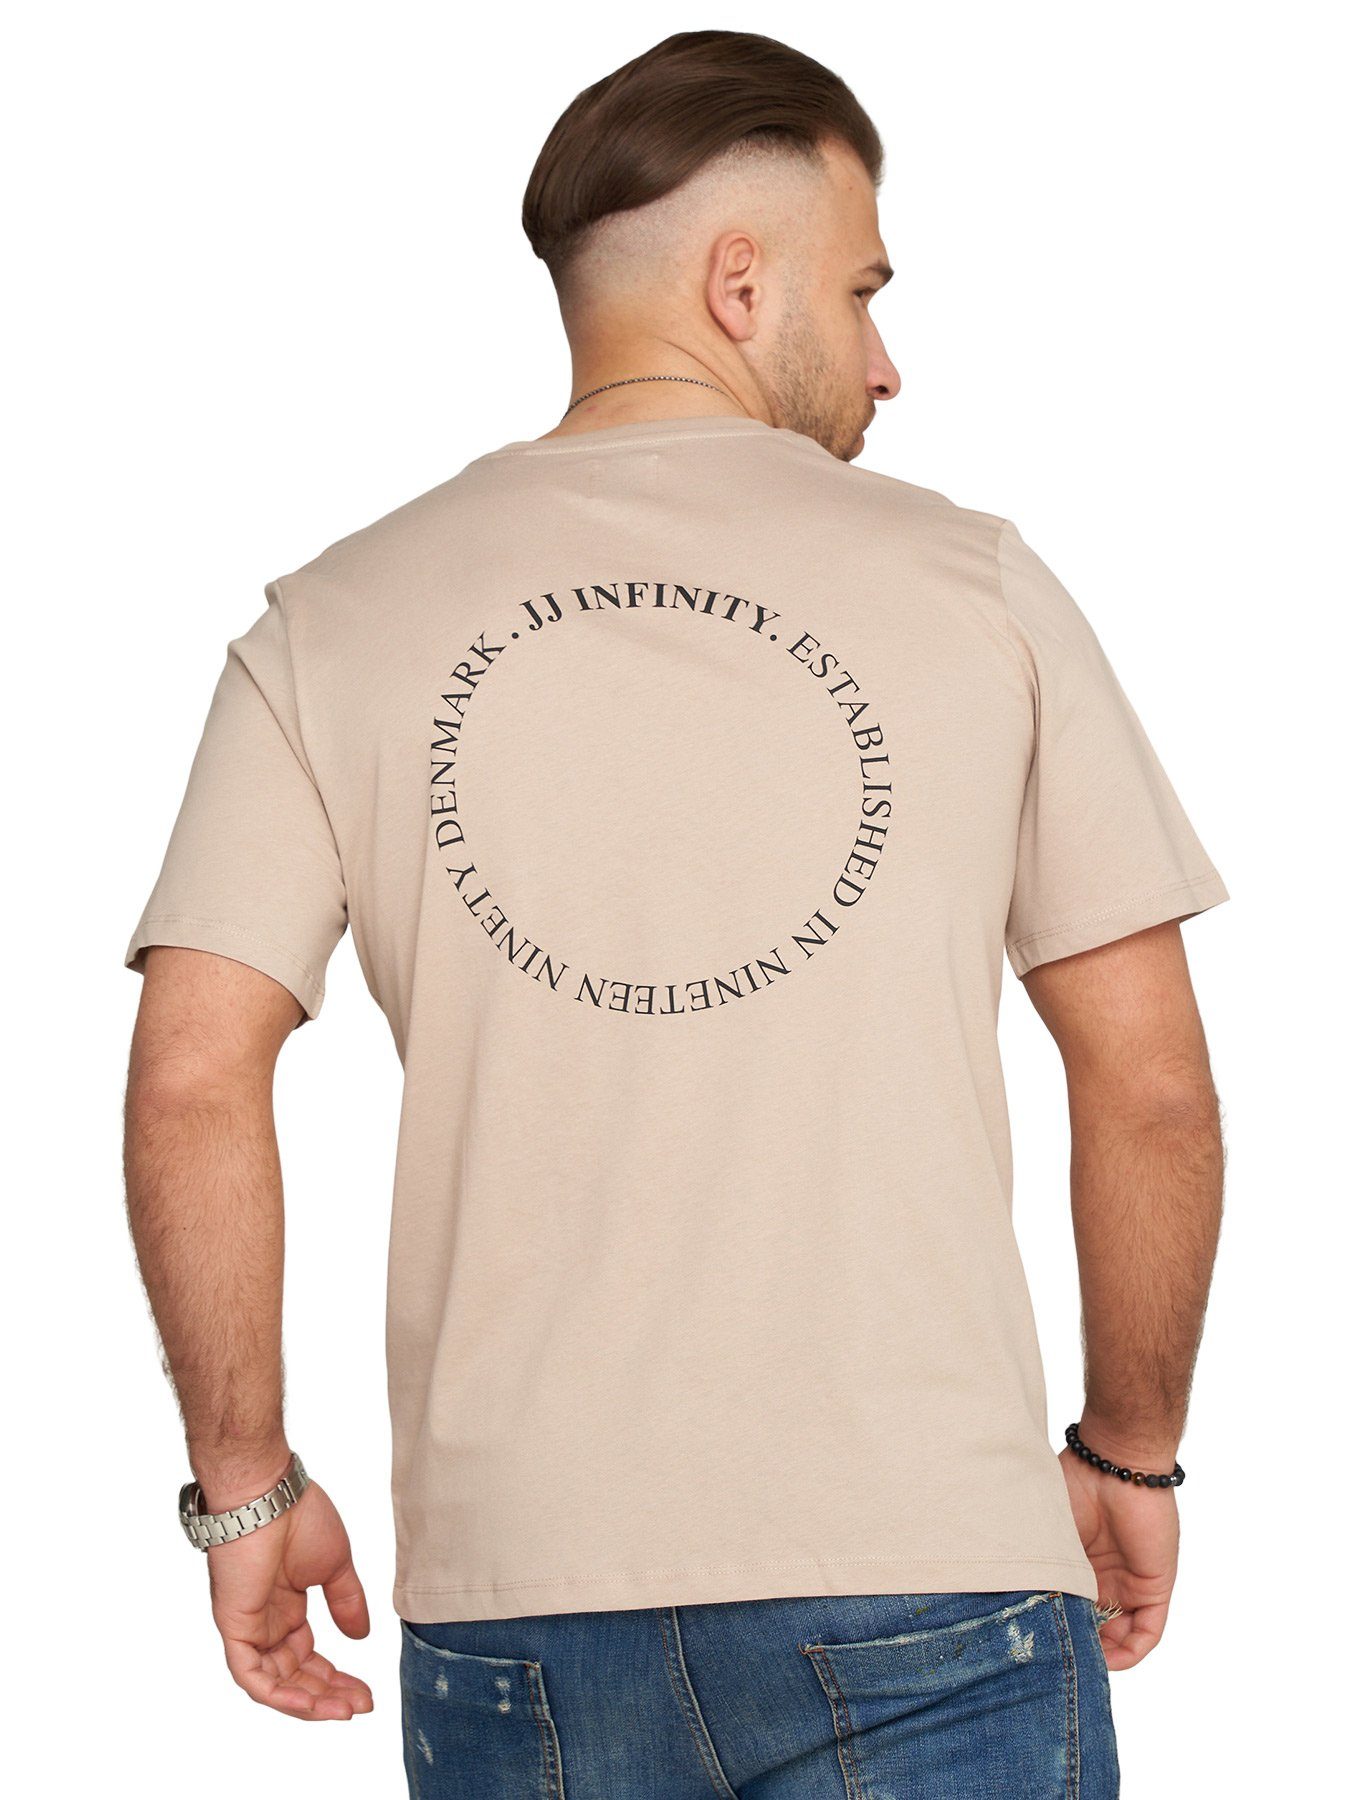 Jack & Jones T-Shirt INFINITY ROUND Multipack 3er Pack